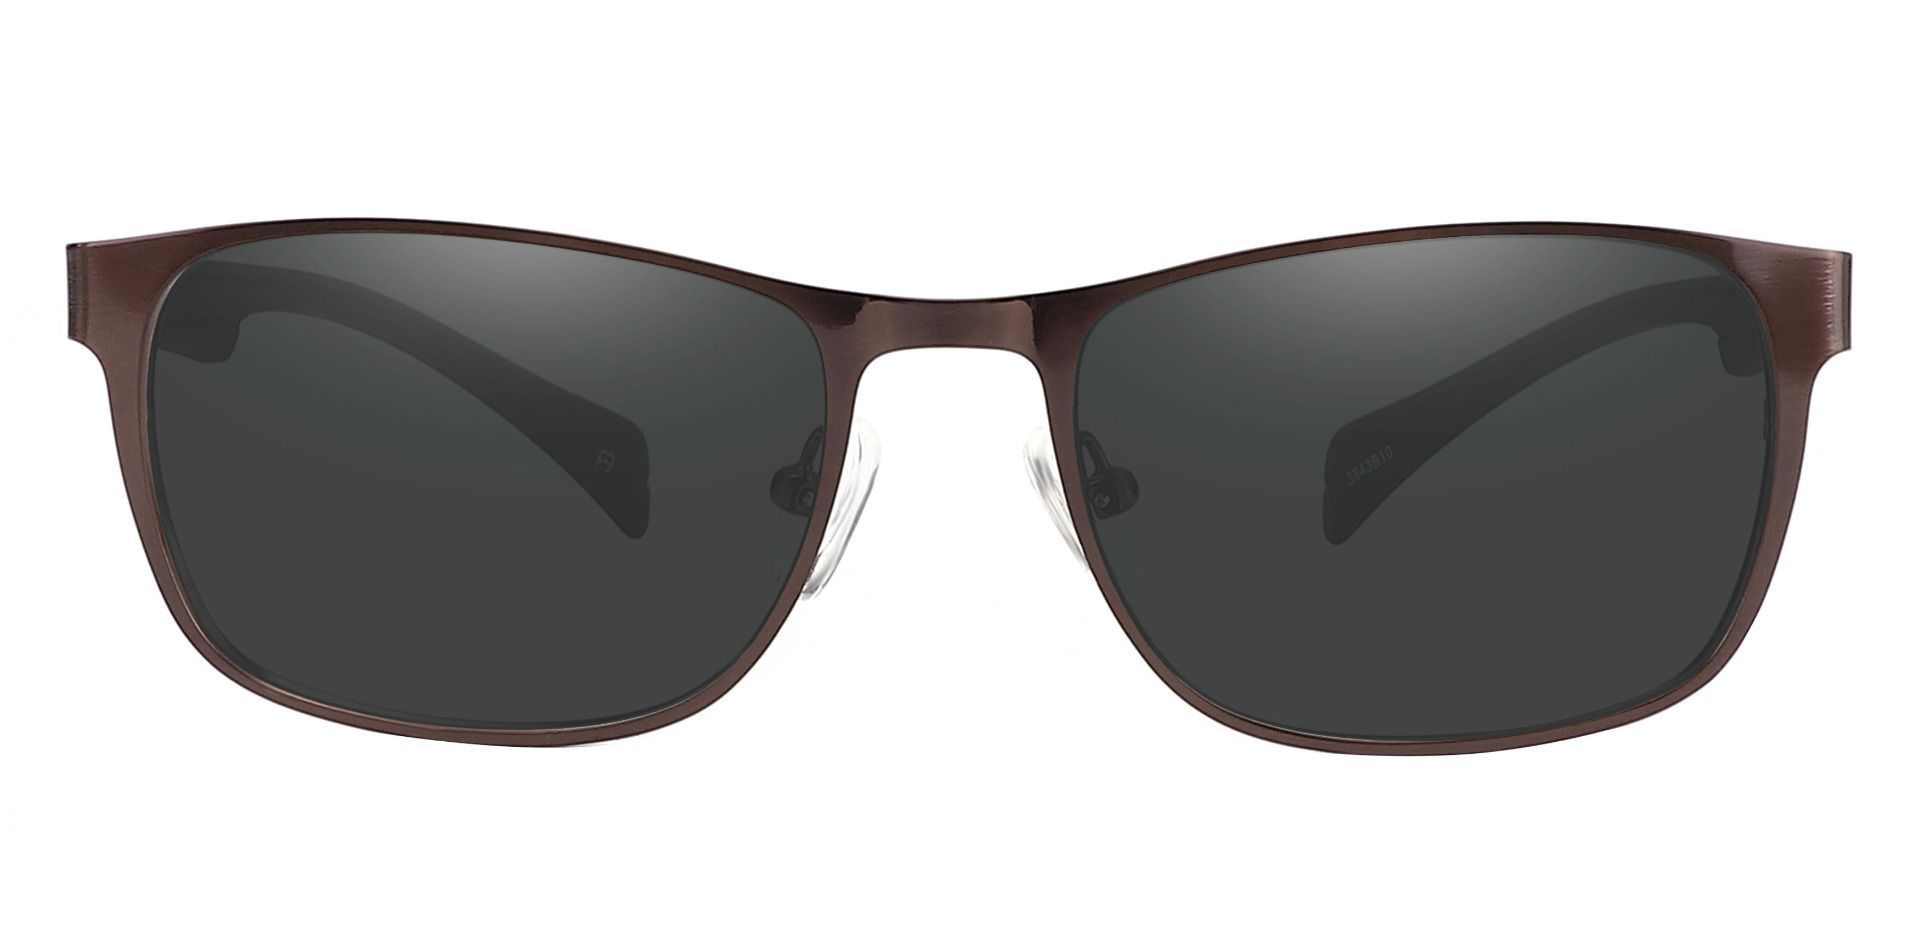 Duncan Rectangle Prescription Sunglasses - Brown Frame With Gray Lenses